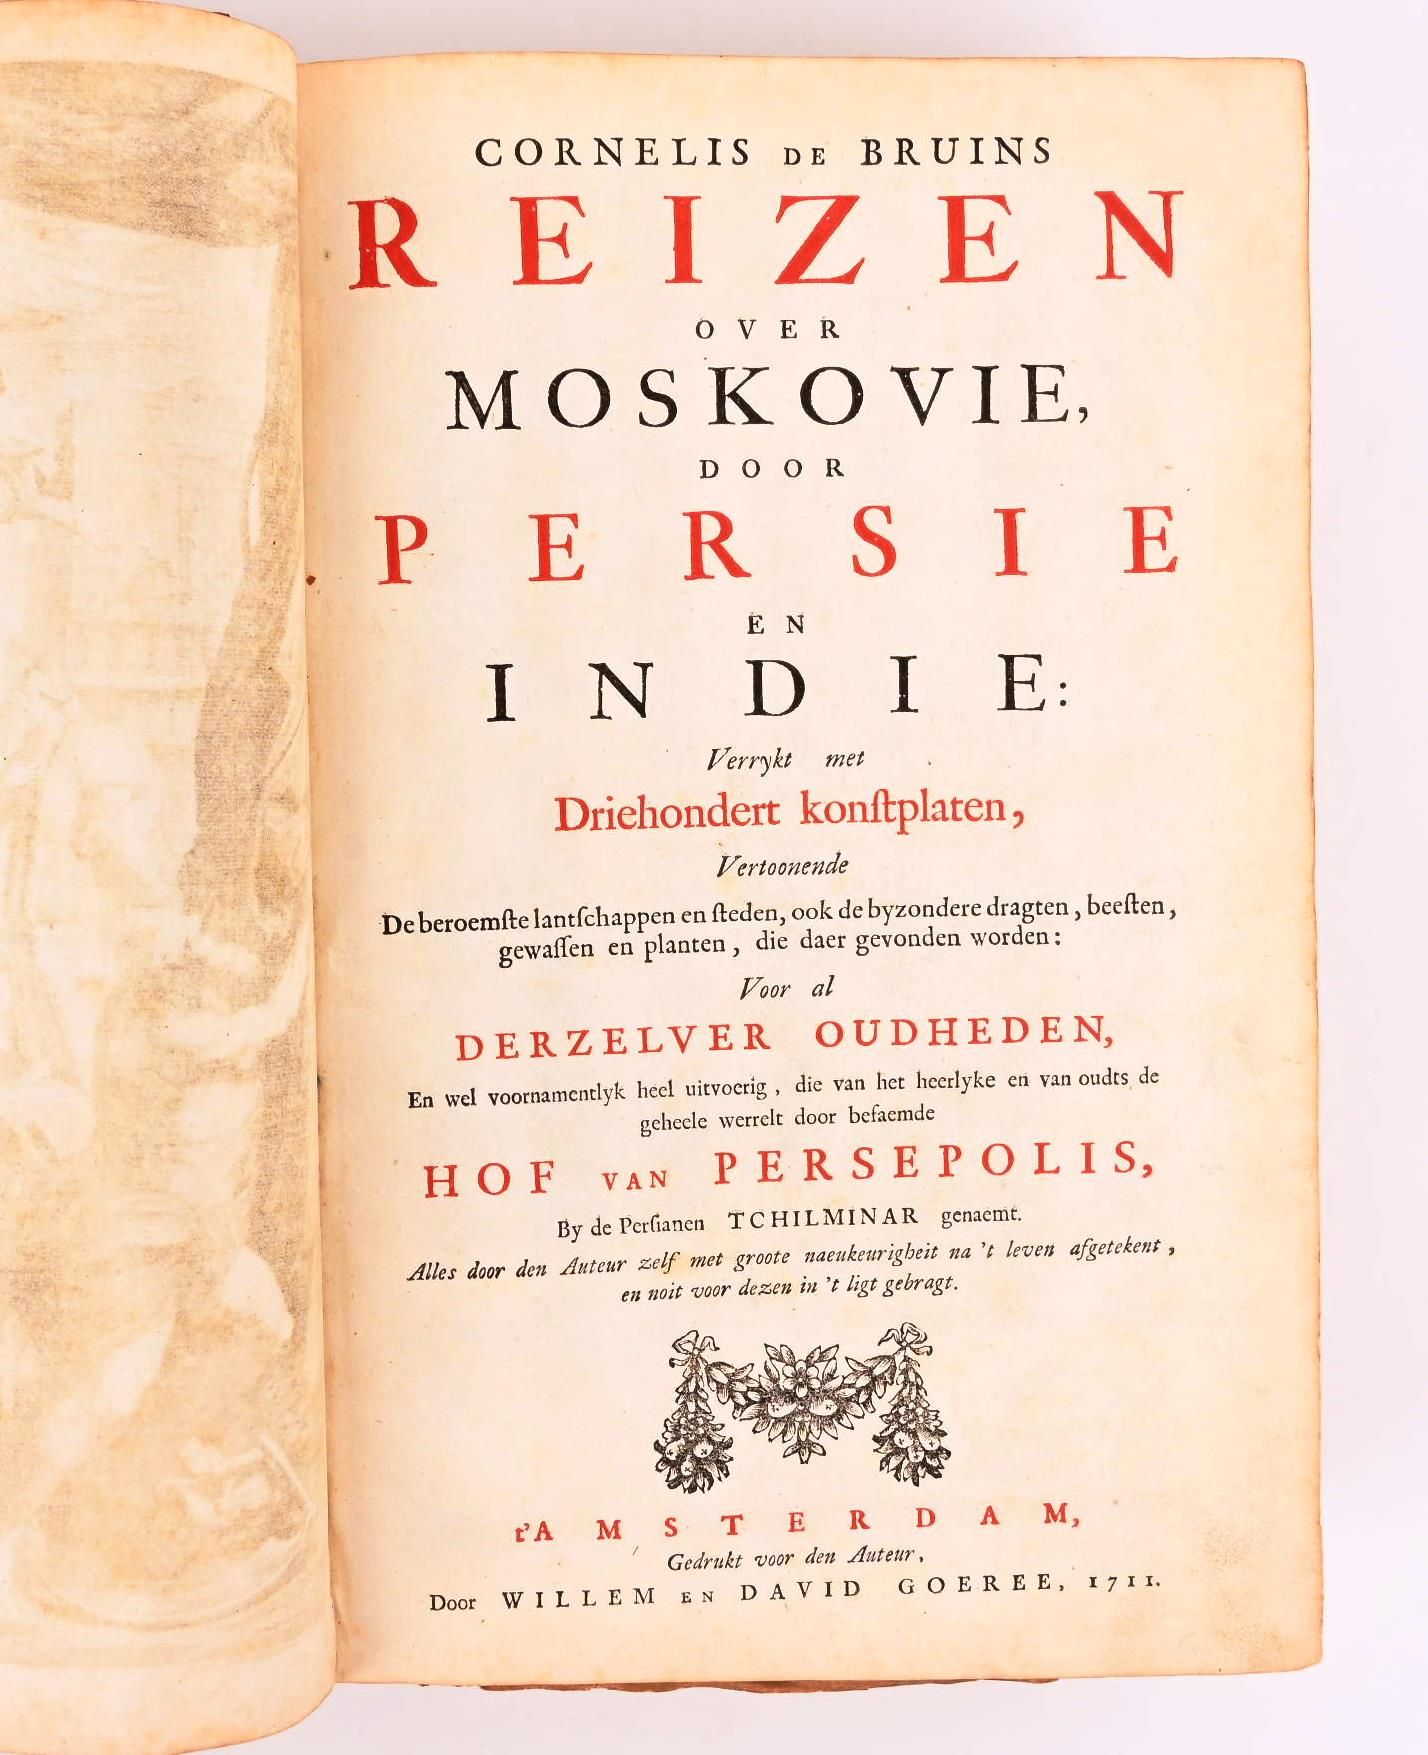 Null BRUYN, Cornelis de

从波斯和印度到莫斯科的访问

阿姆斯特丹，Willem和David Goeree, 1711年

在对开页中。&hellip;